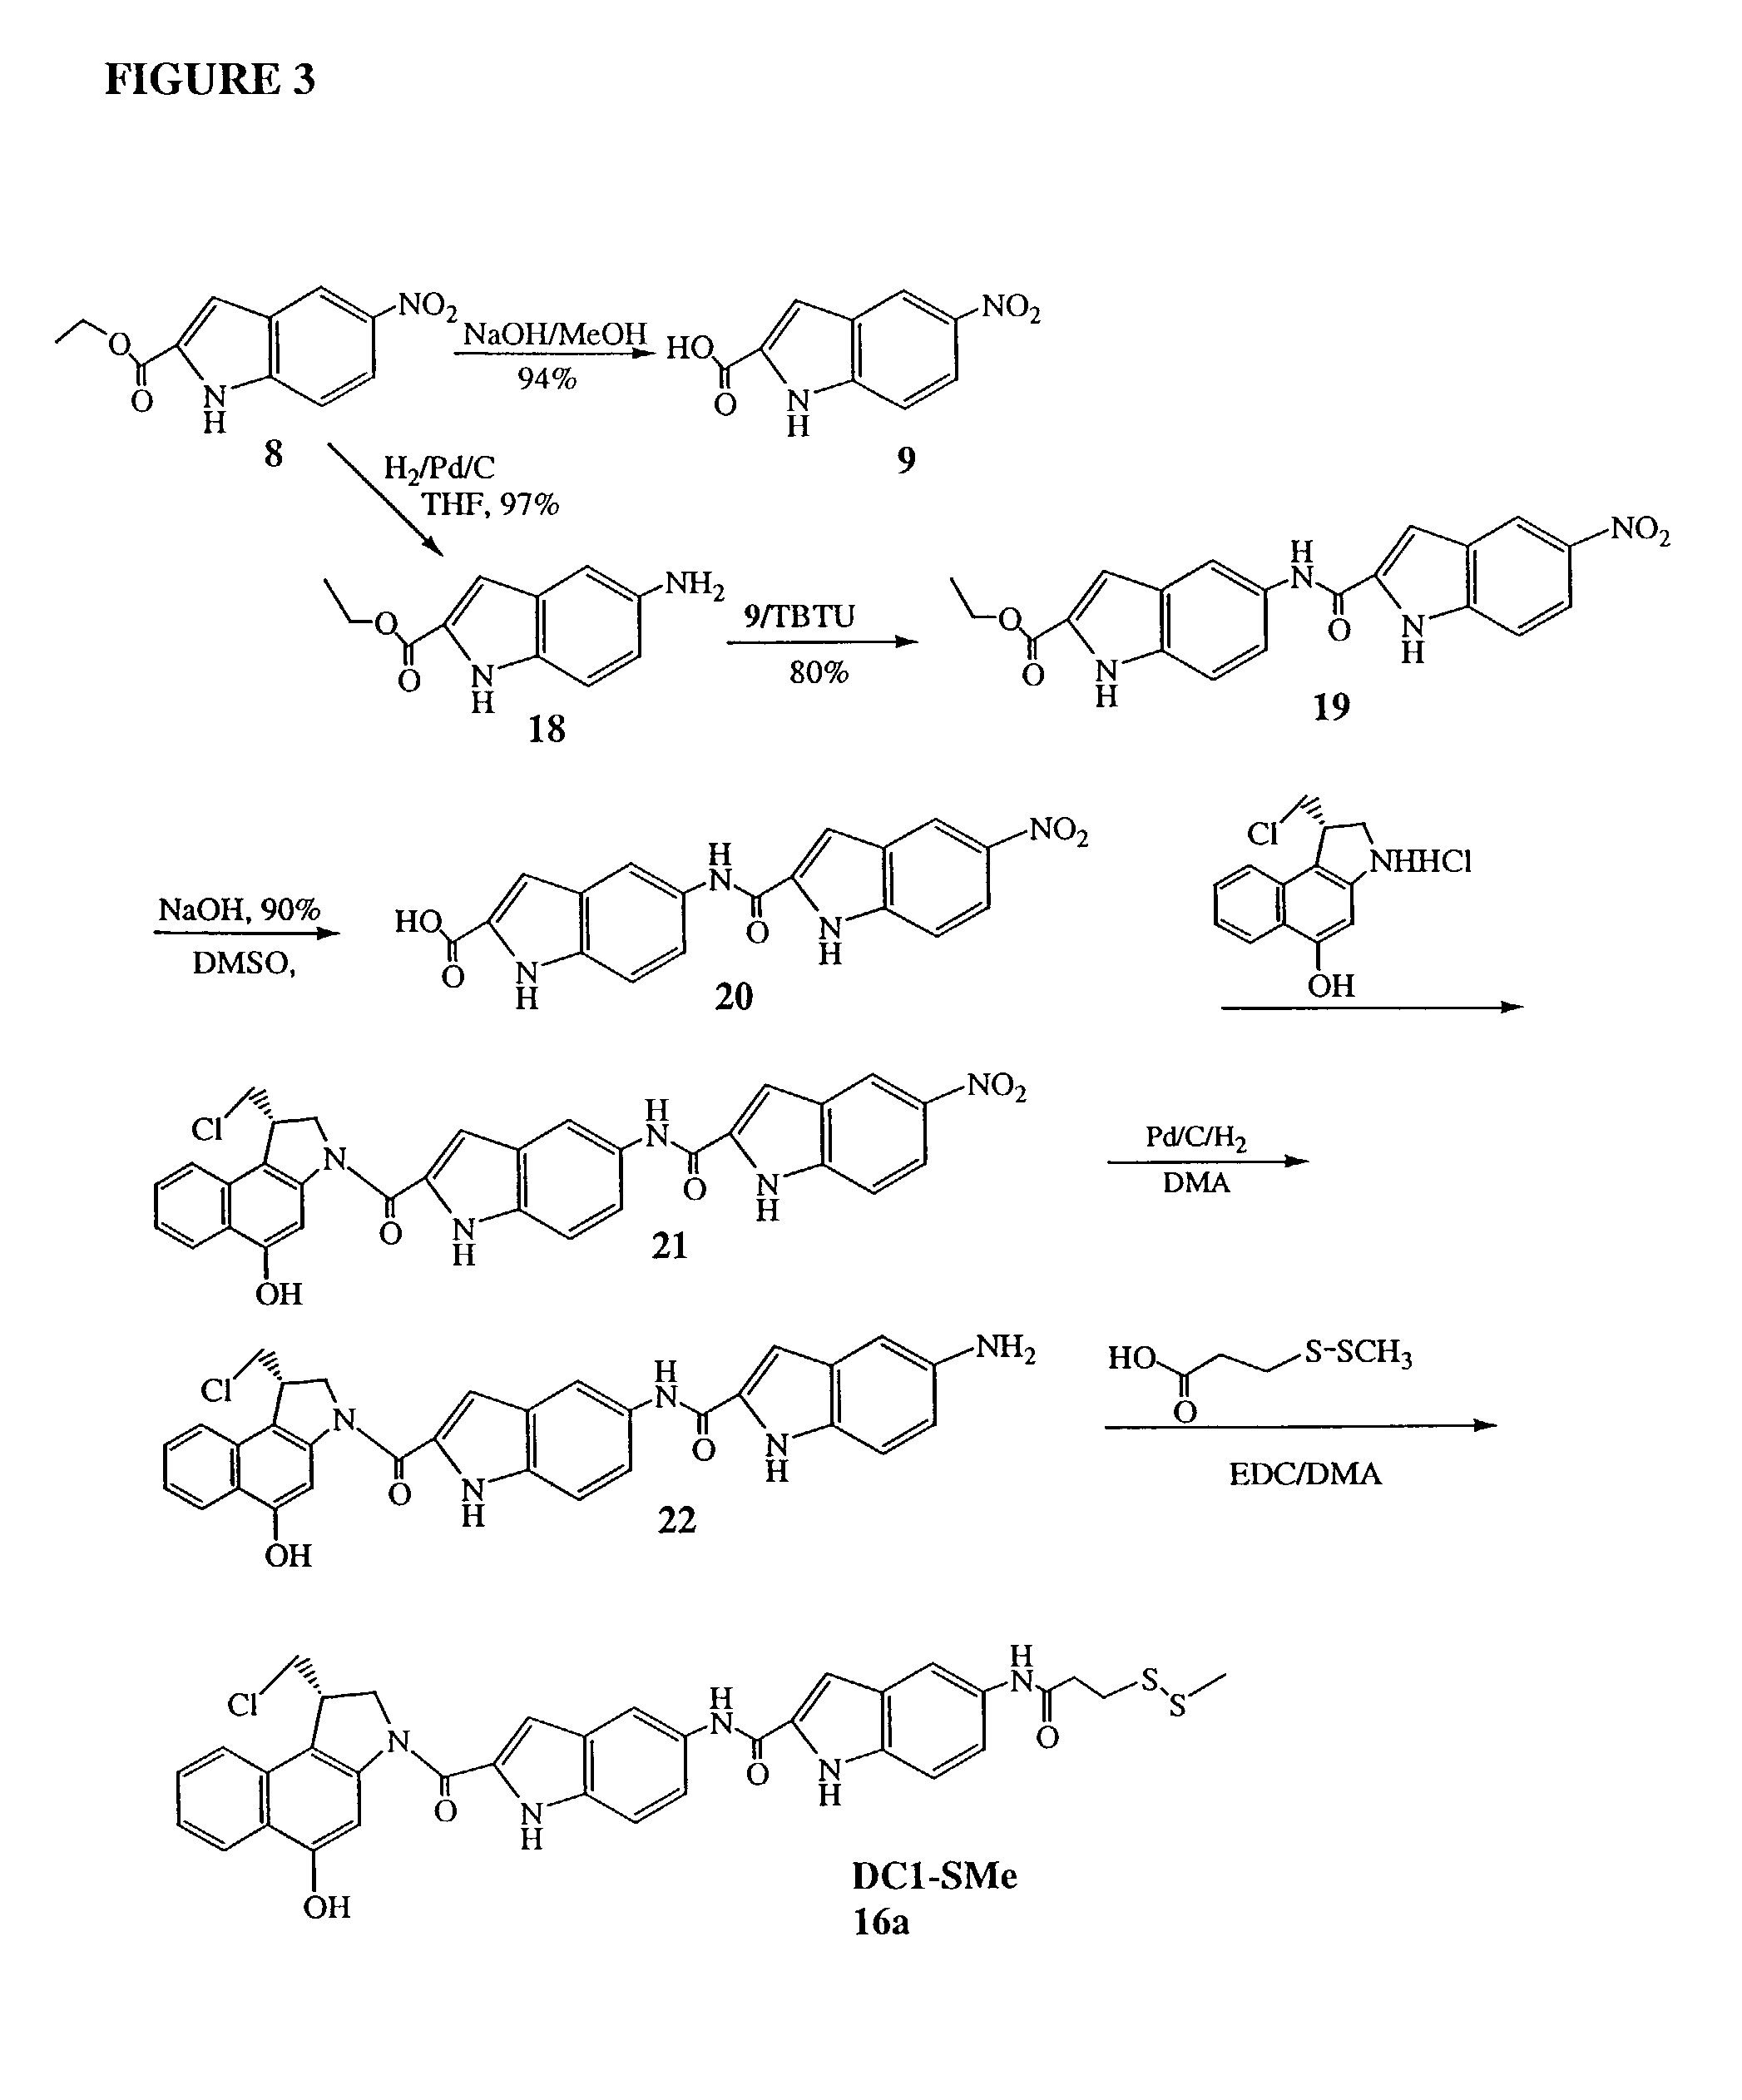 CC-1065 analog synthesis